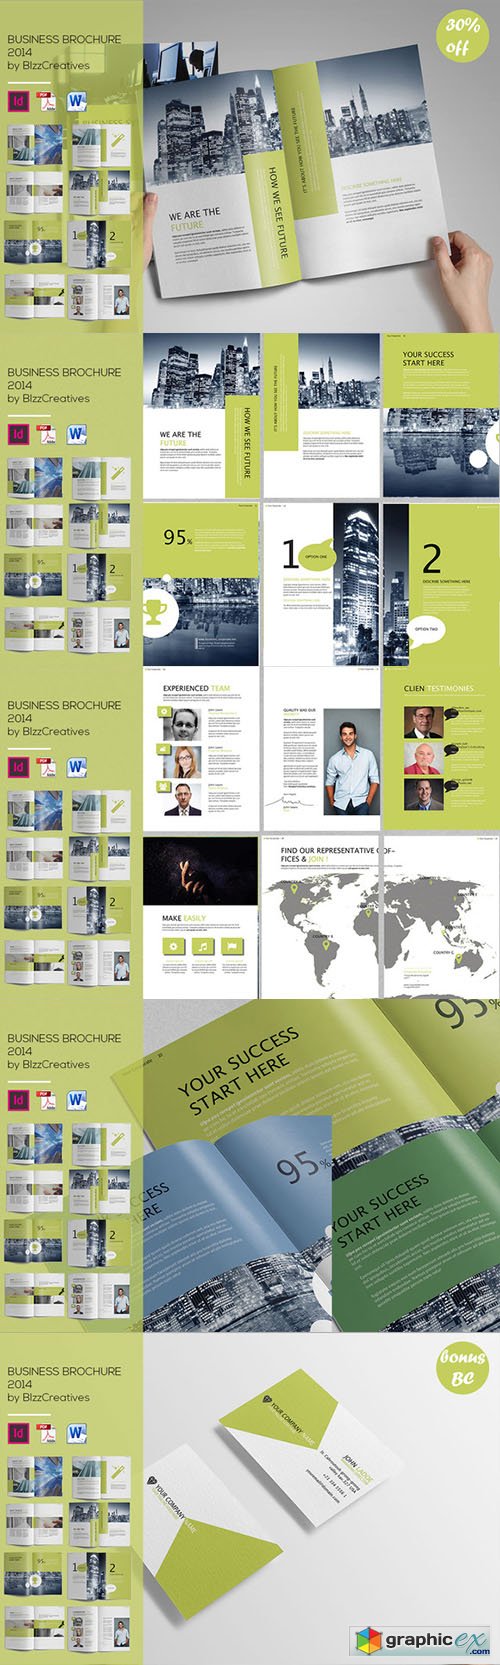  Business System Brochure